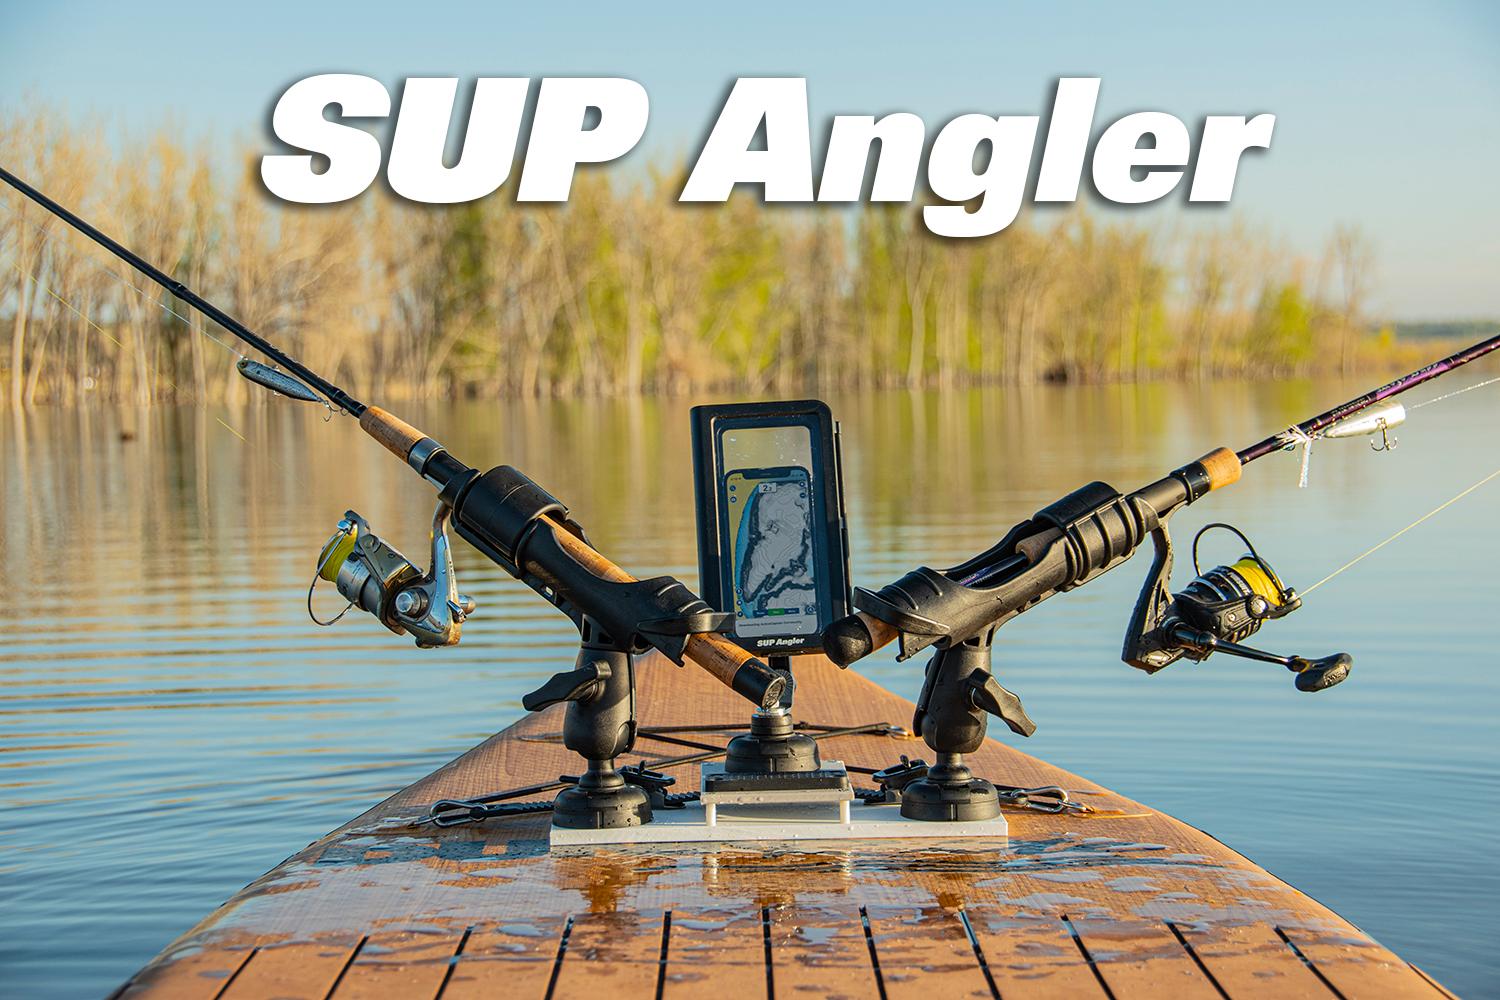 The SUP Angler Universal Mounting Kit Introduction